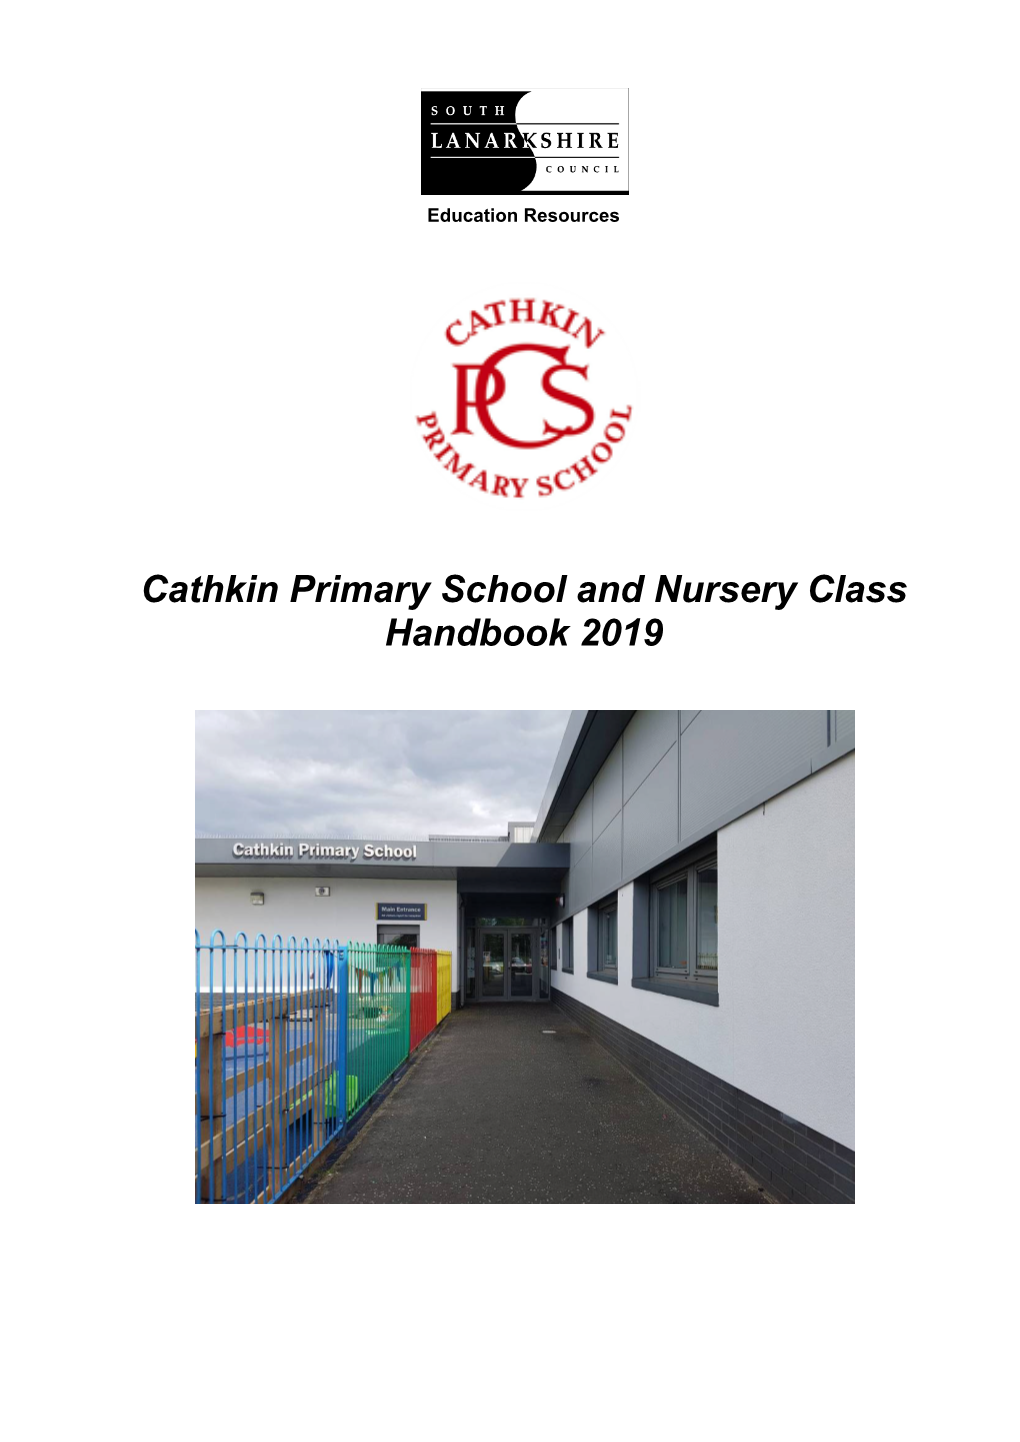 Cathkin Primary School and Nursery Class Handbook 2019